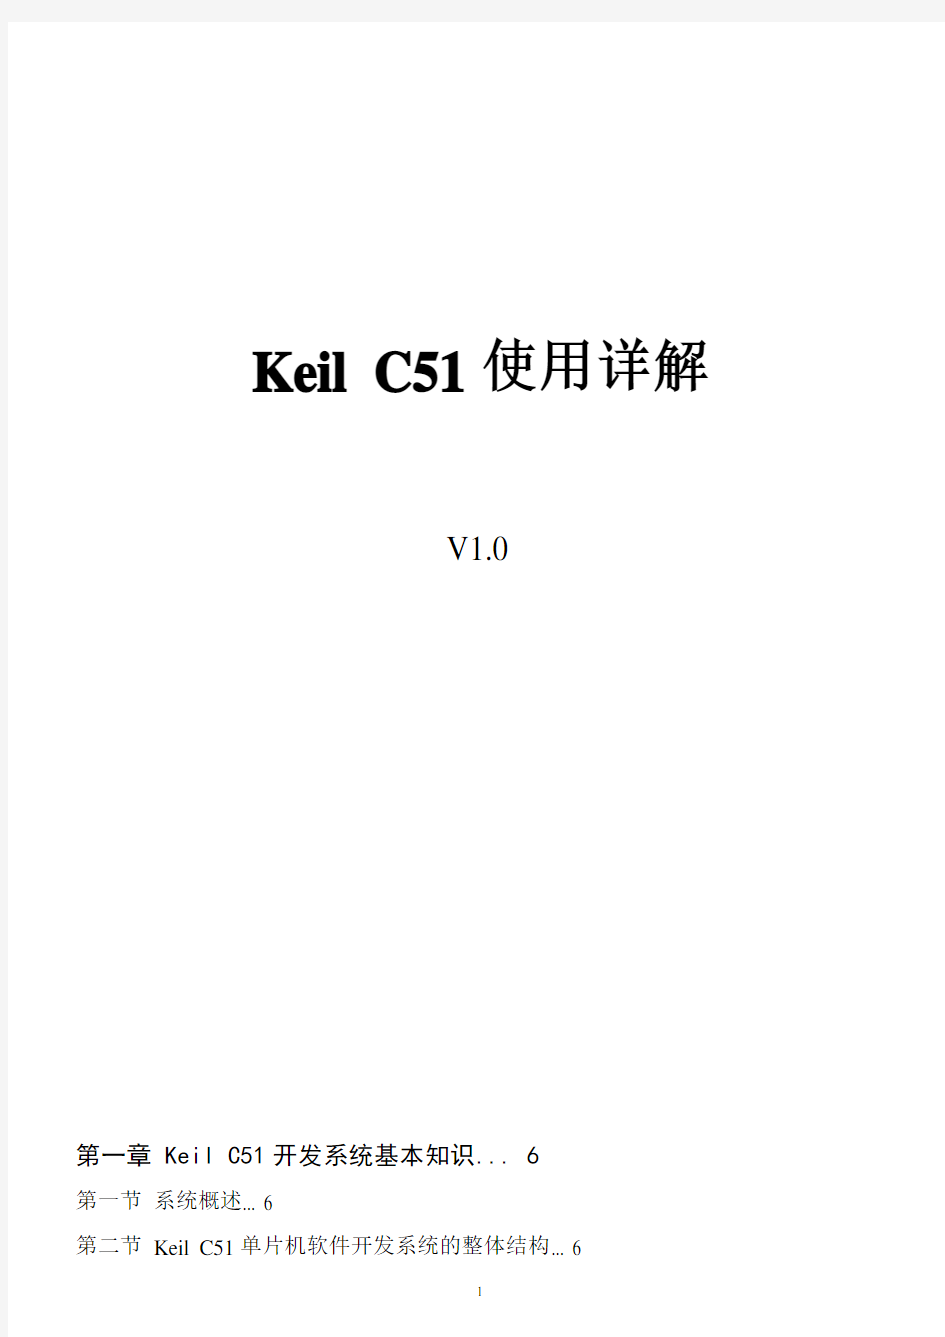 keil c51 详细中文手册